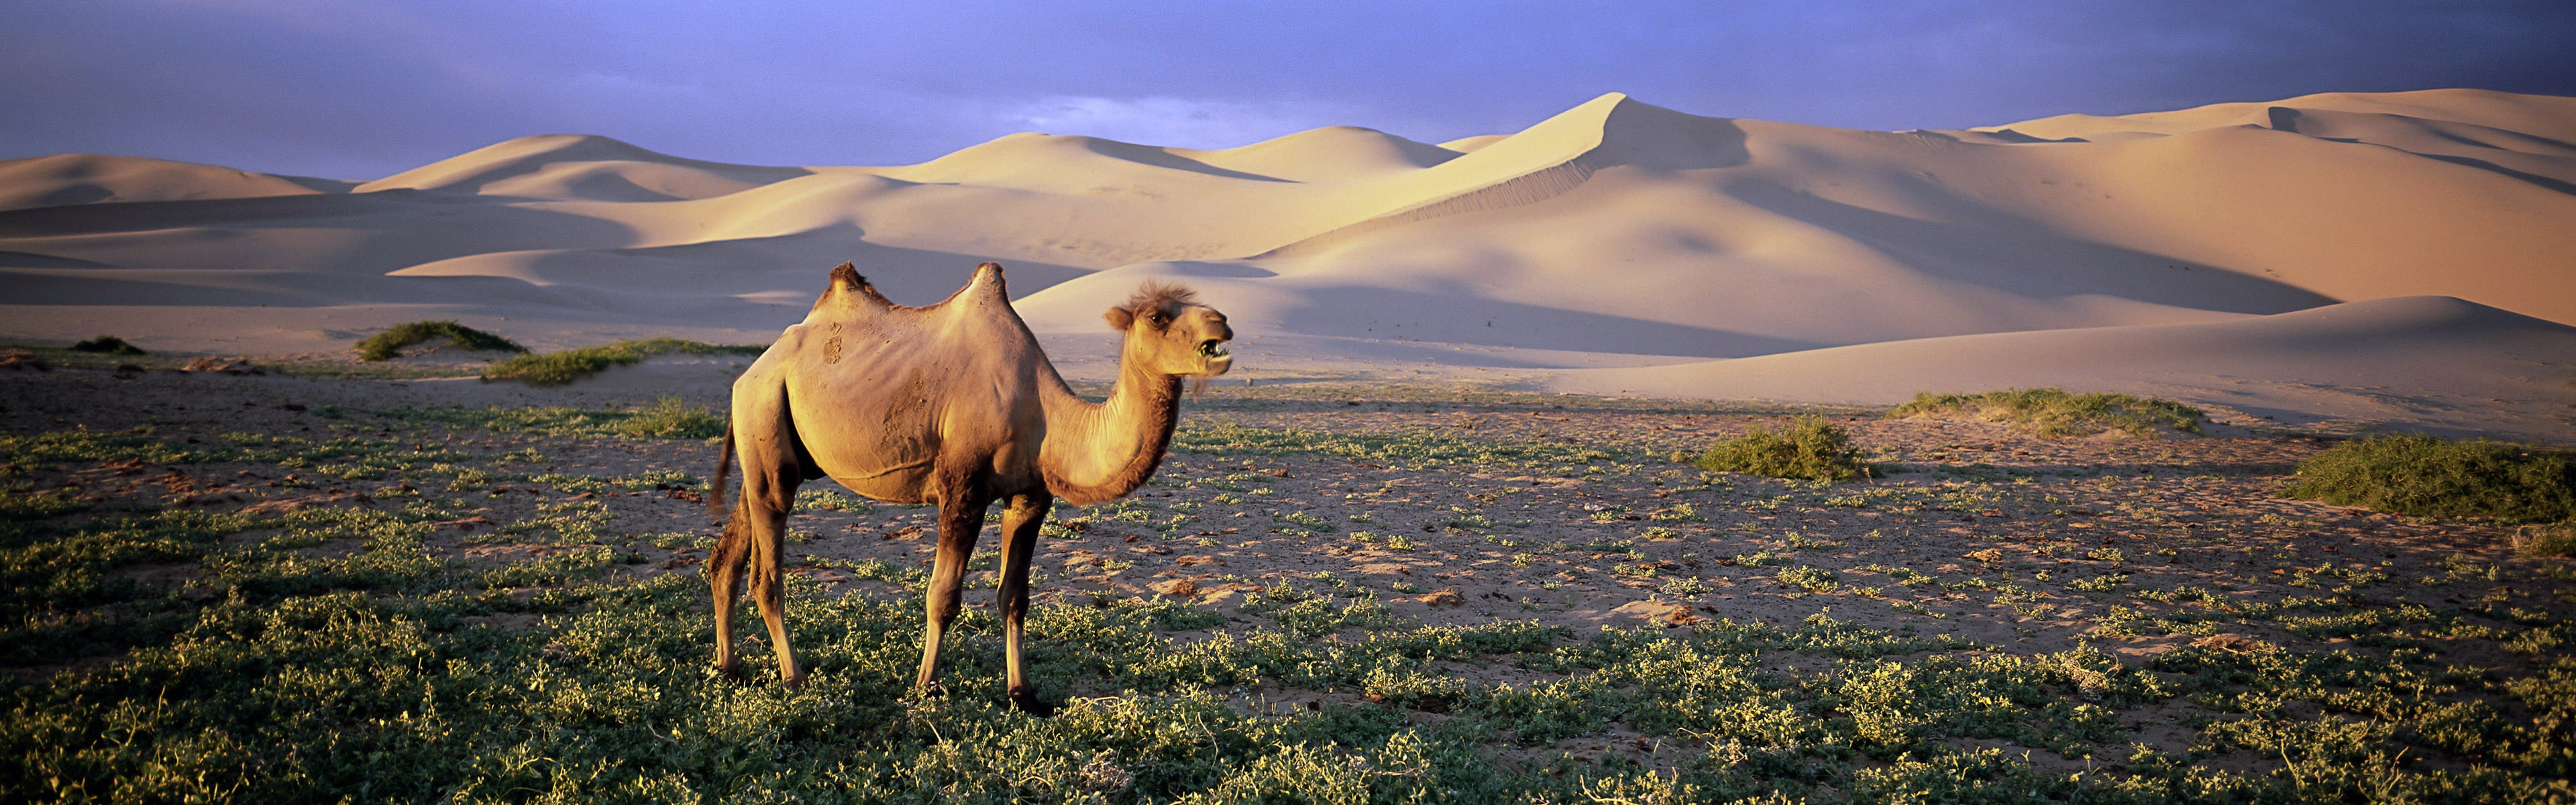 white camel, nature, animals, wildlife, desert